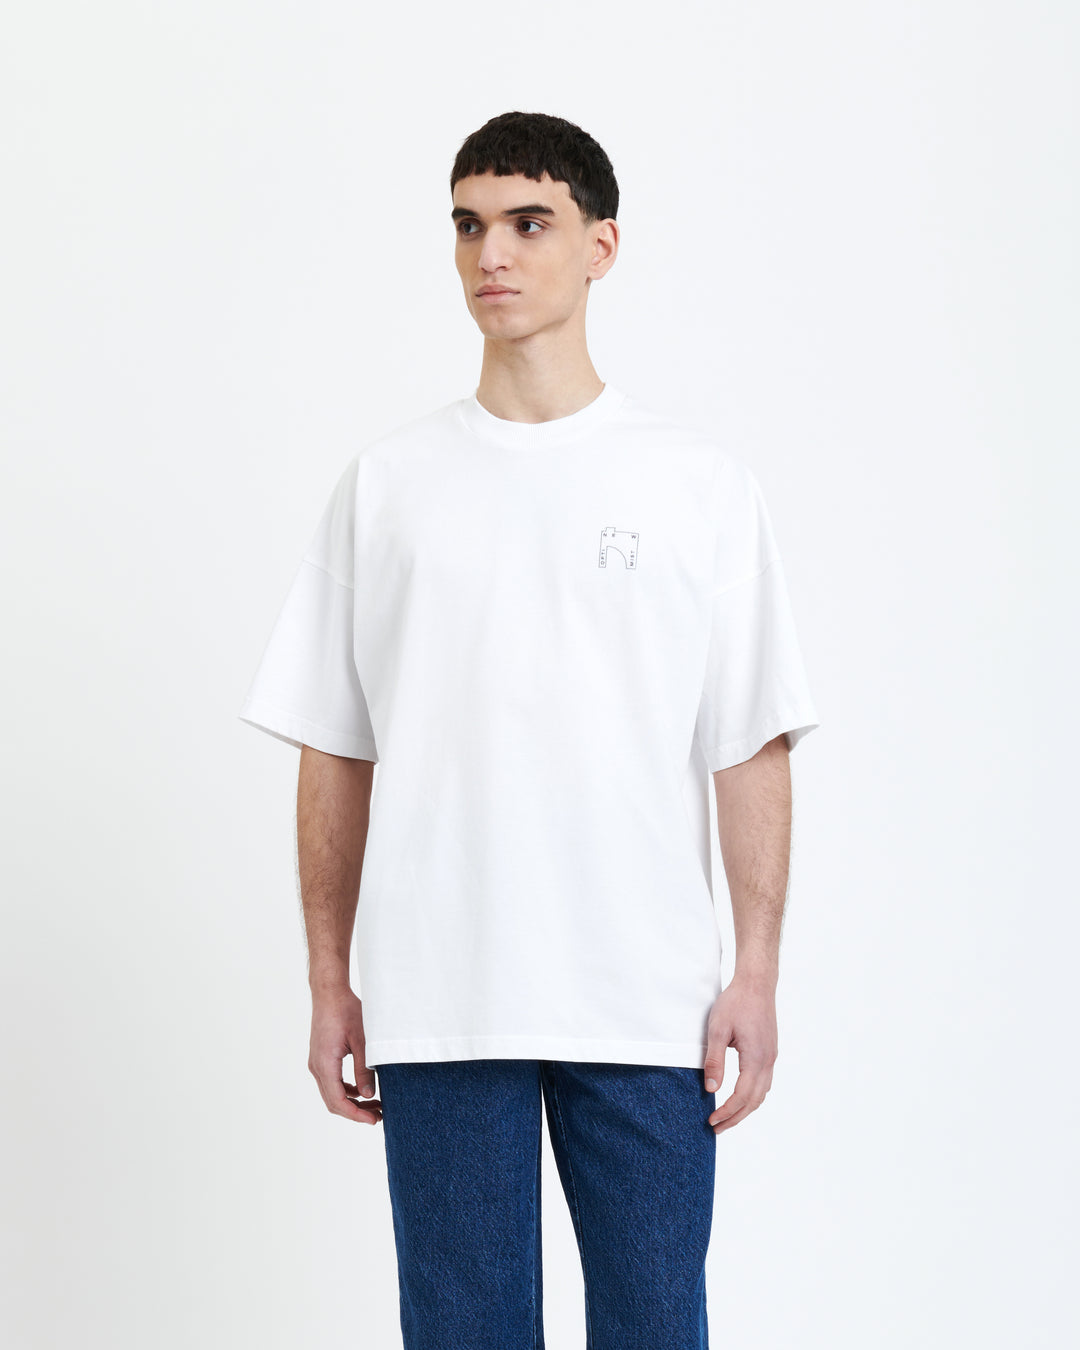 New Optimist menswear Relaxed T-shirt factory print T-shirt